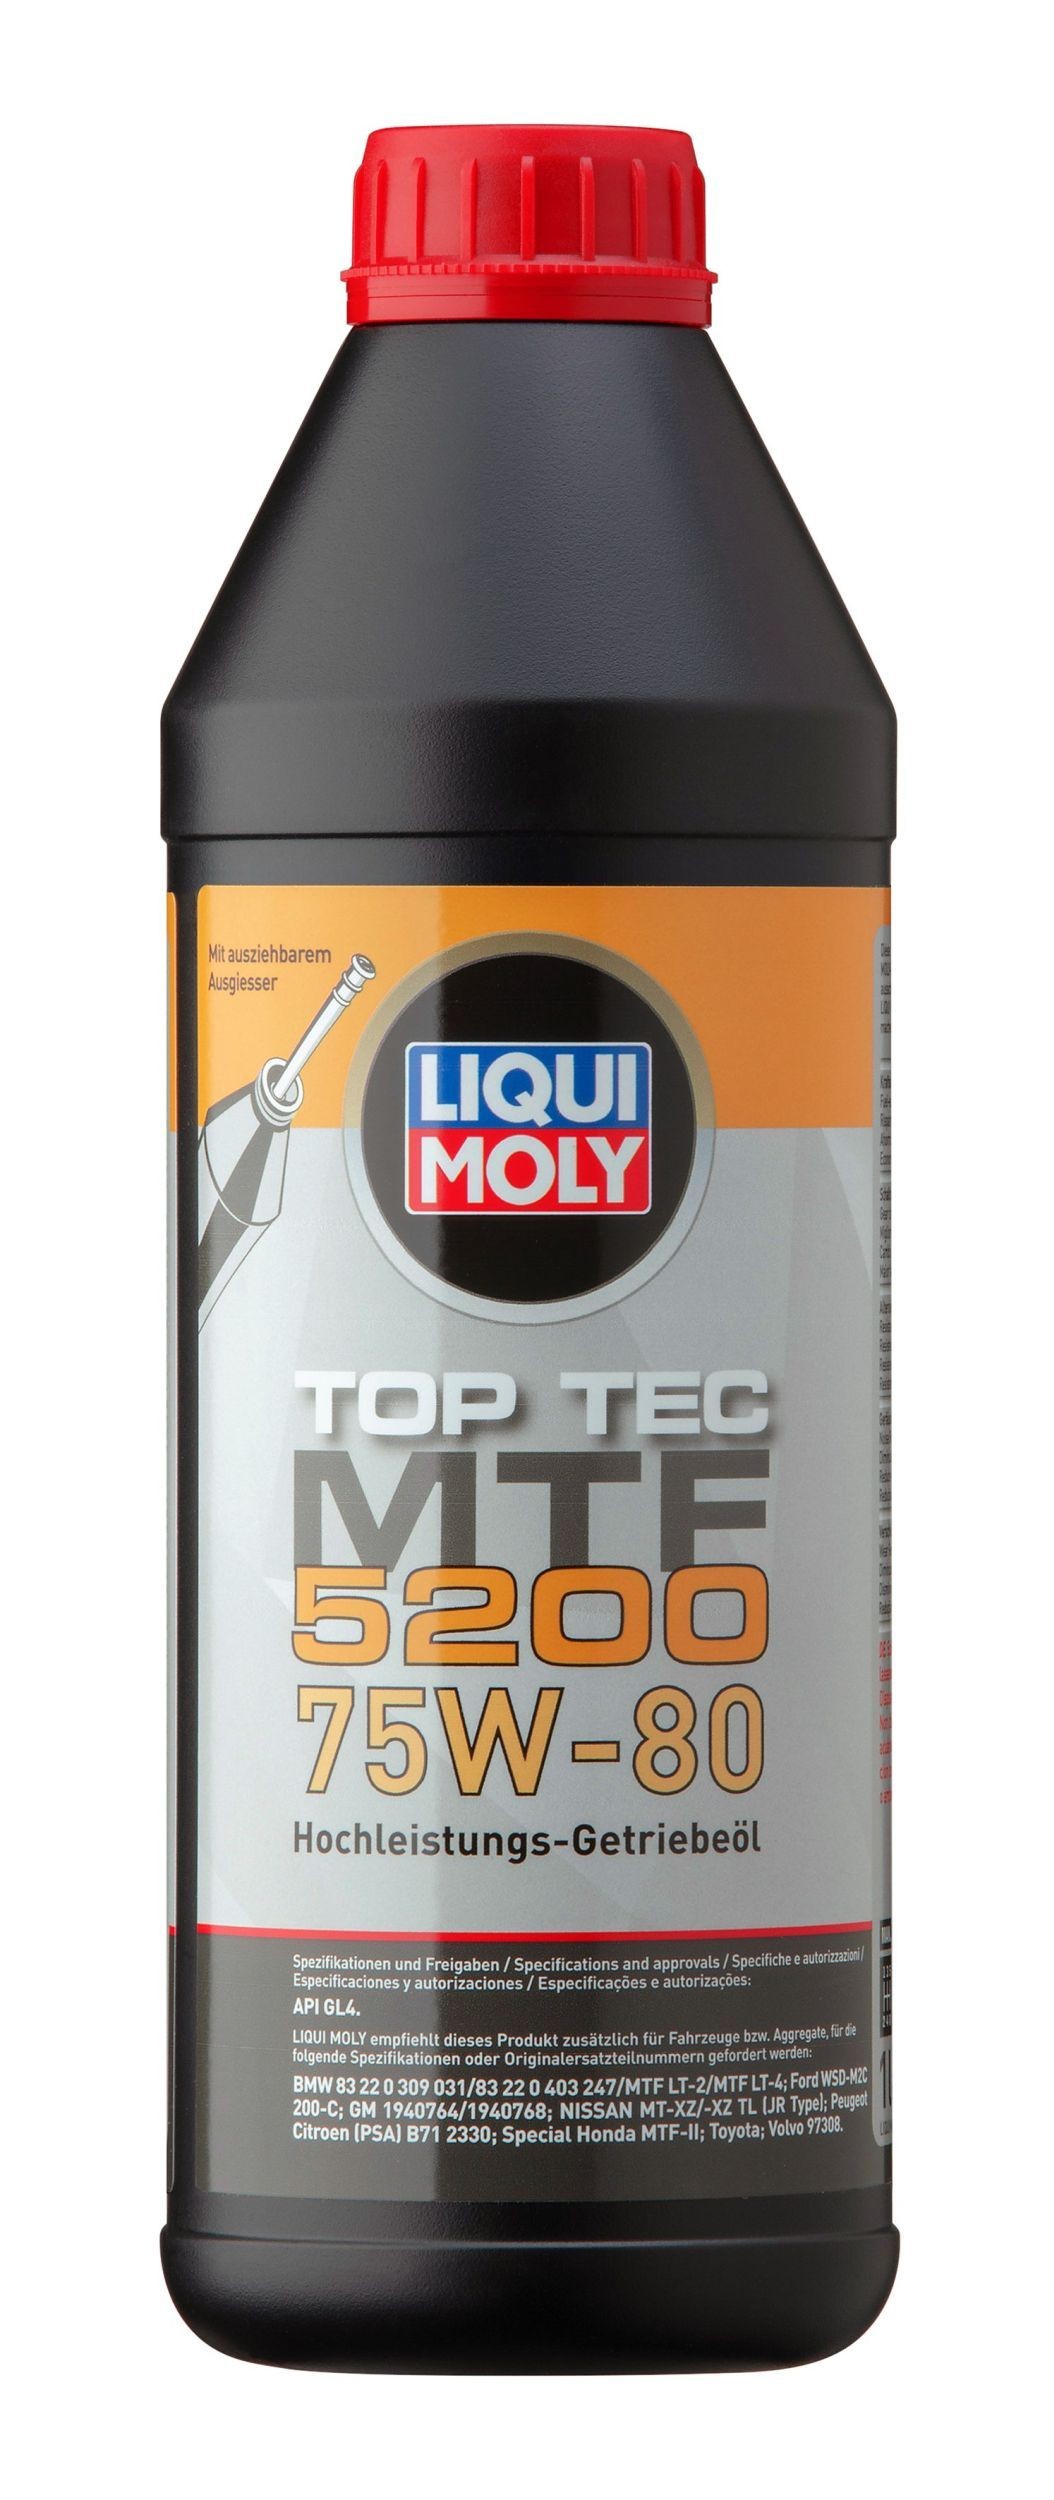 LIQUI MOLY Top Tec, MTF 5200 20845 HERCULES Getriebeöl Motorrad zum günstigen Preis